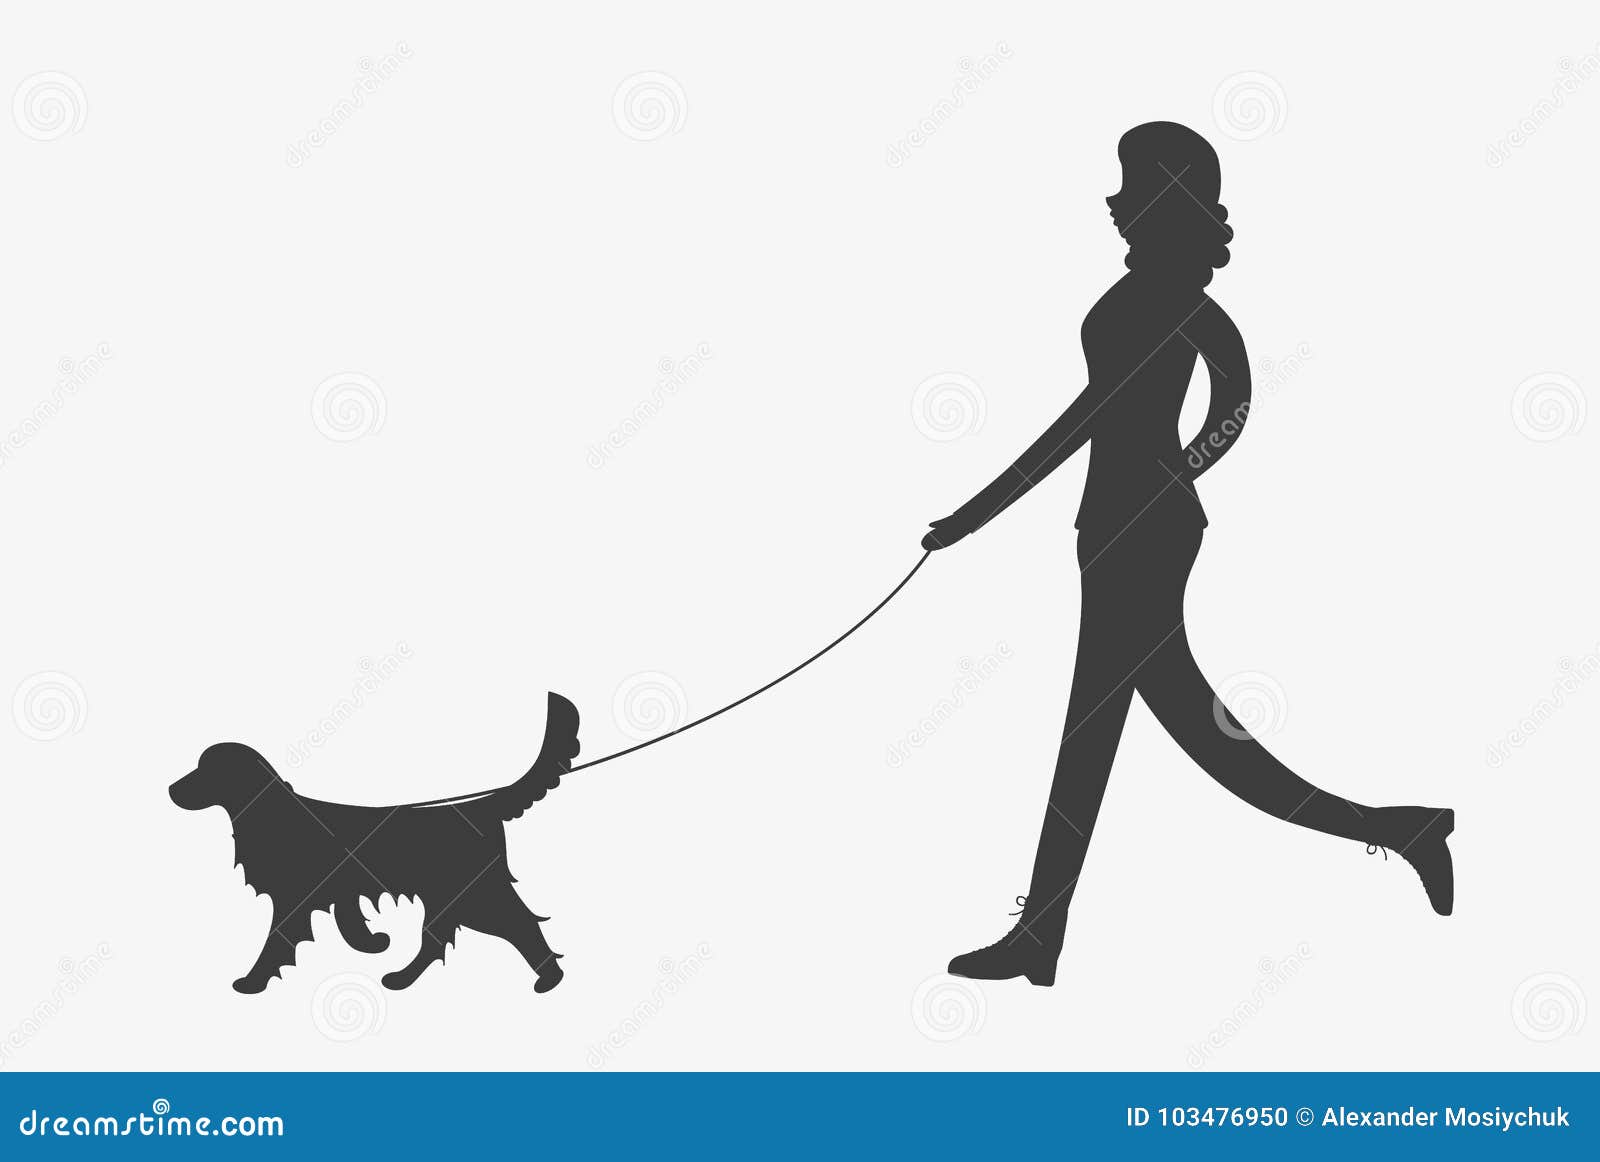 Details about   Playmobil animal WOMAN W/ BLACK HAIR WALKING BLACK & WHITE DOG ON LEASH